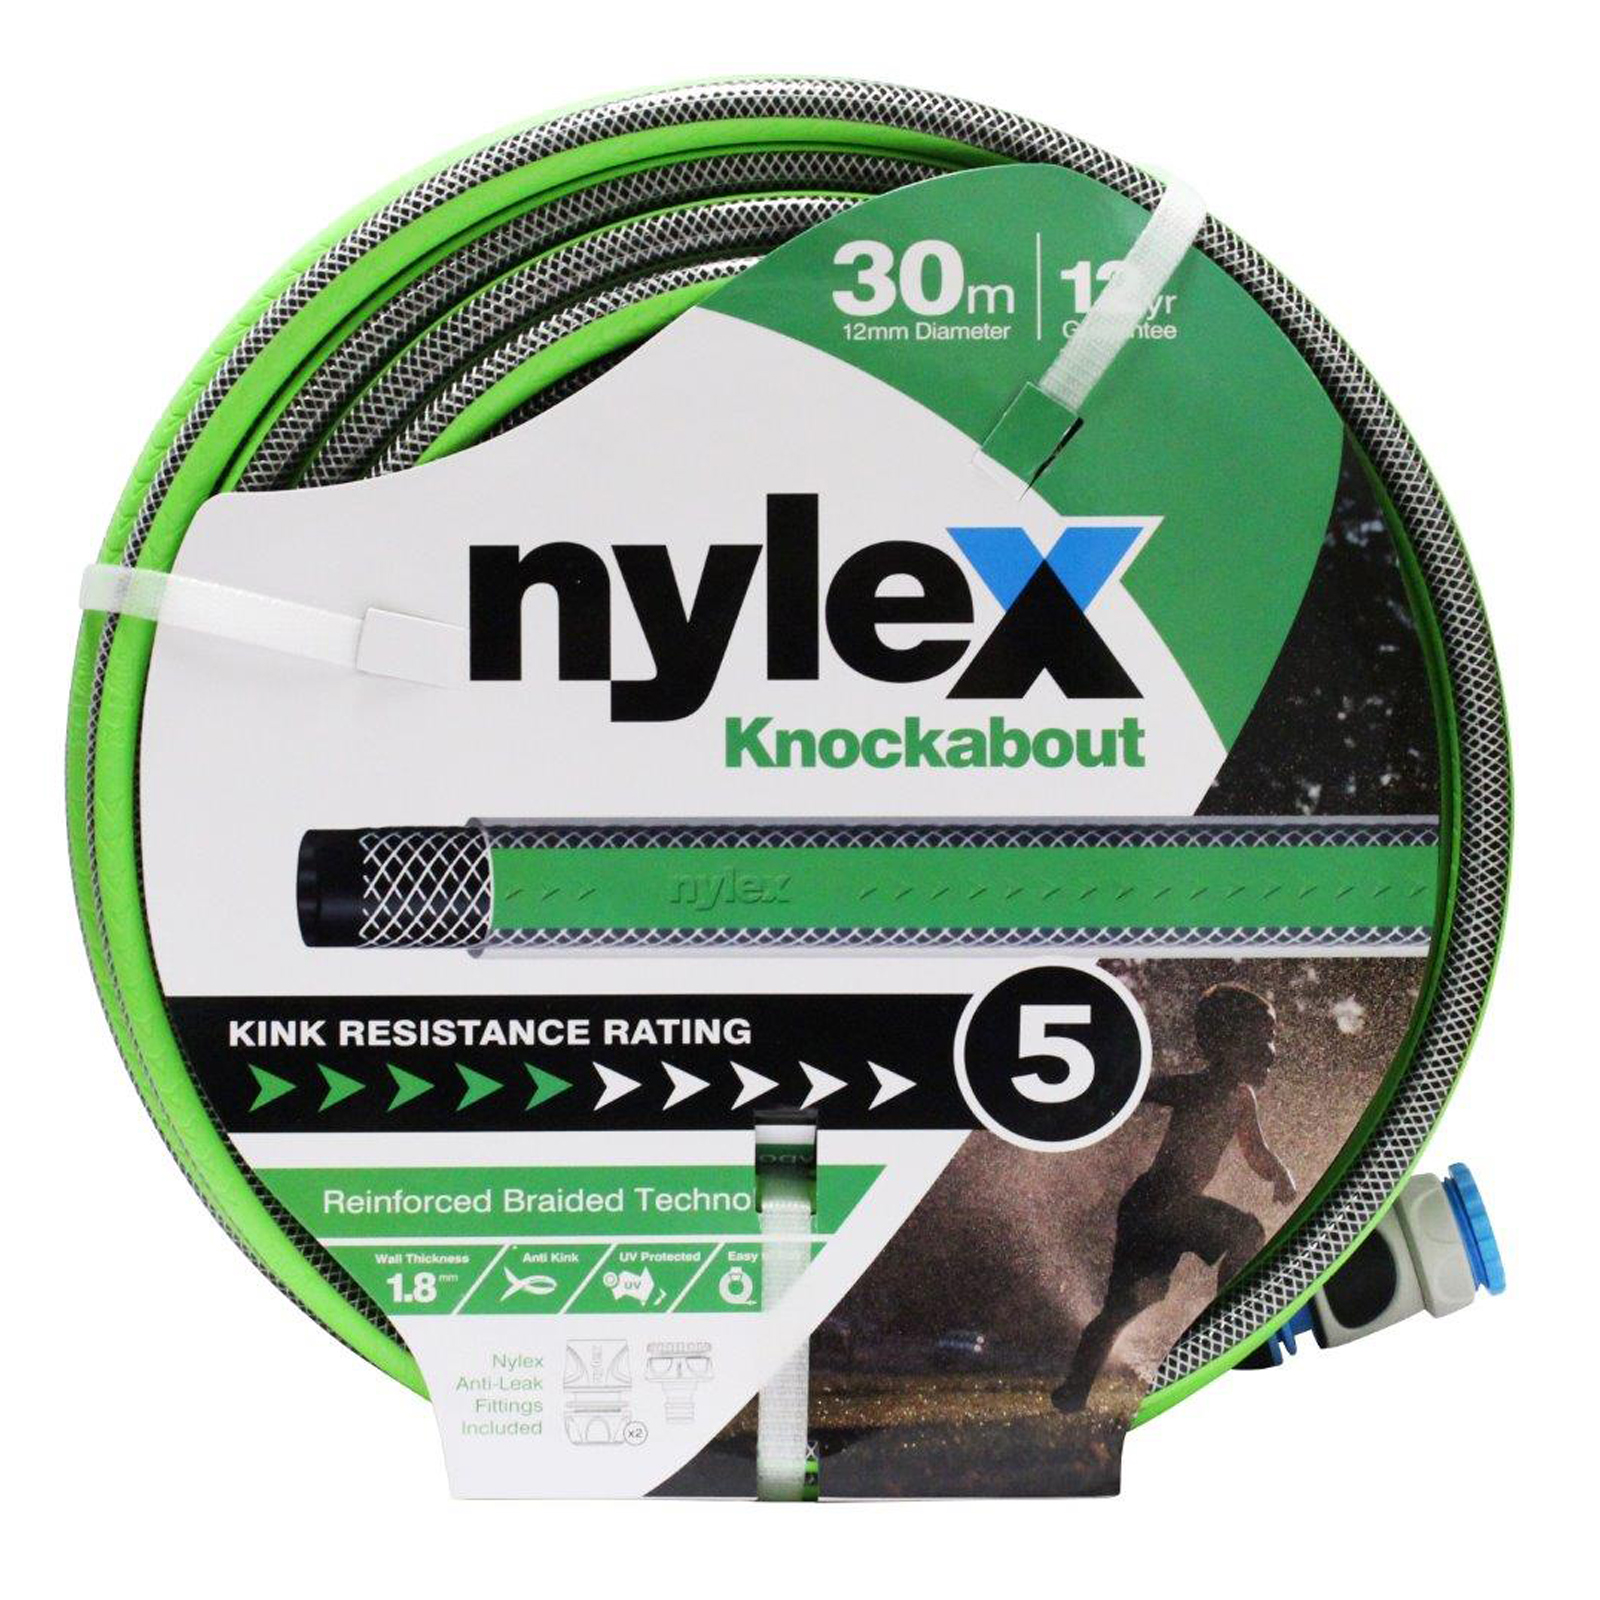 Nylex 12mm x 30m Knockabout Garden Hose